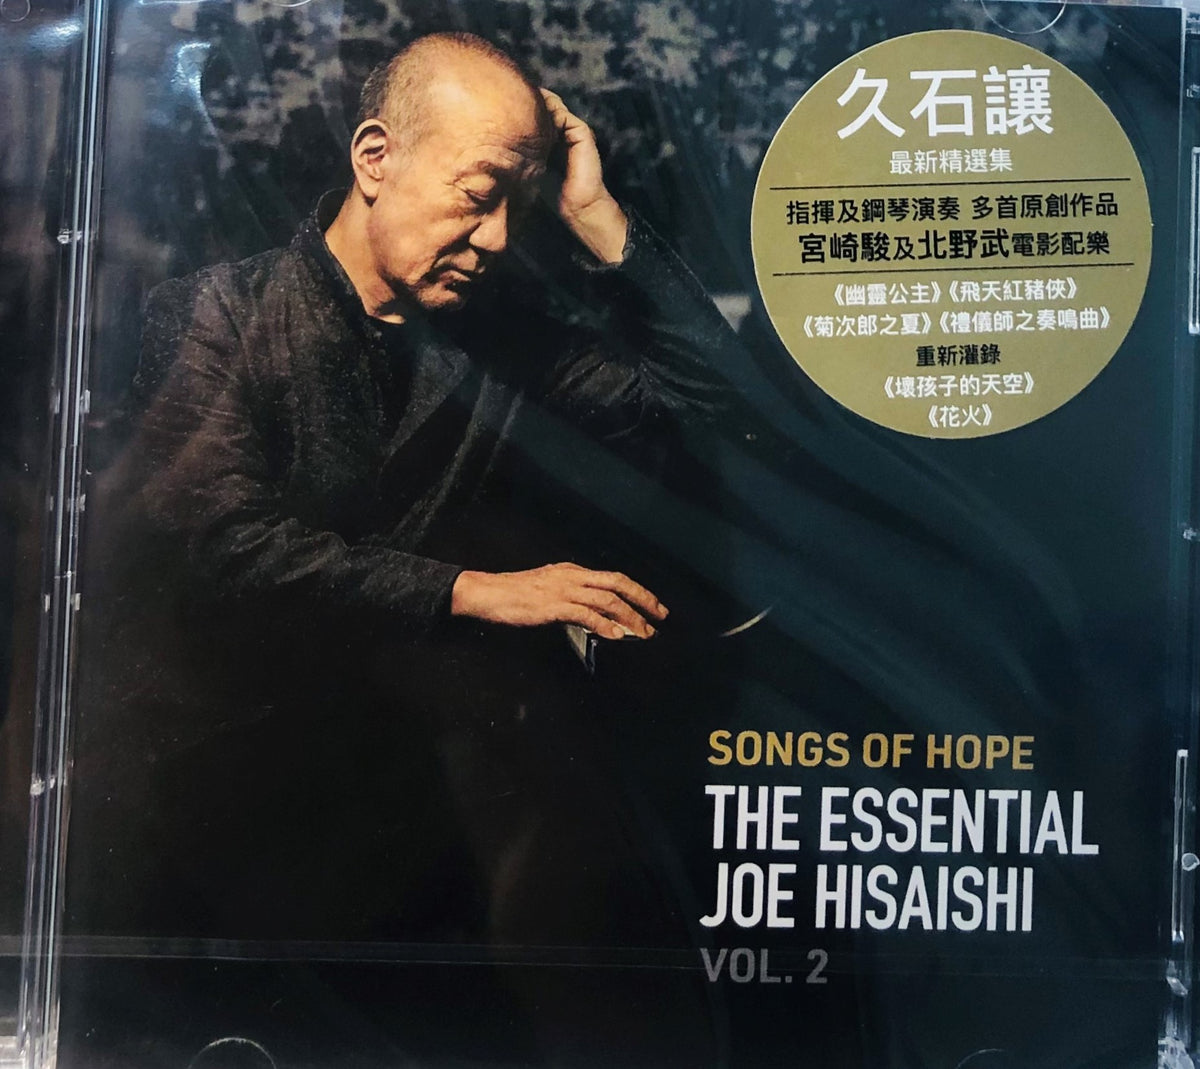 JOE HISAISHI - 久石讓 SONG OF HOPE: THE ESSENTIAL OF JOE HISAISHI VOL 2 (